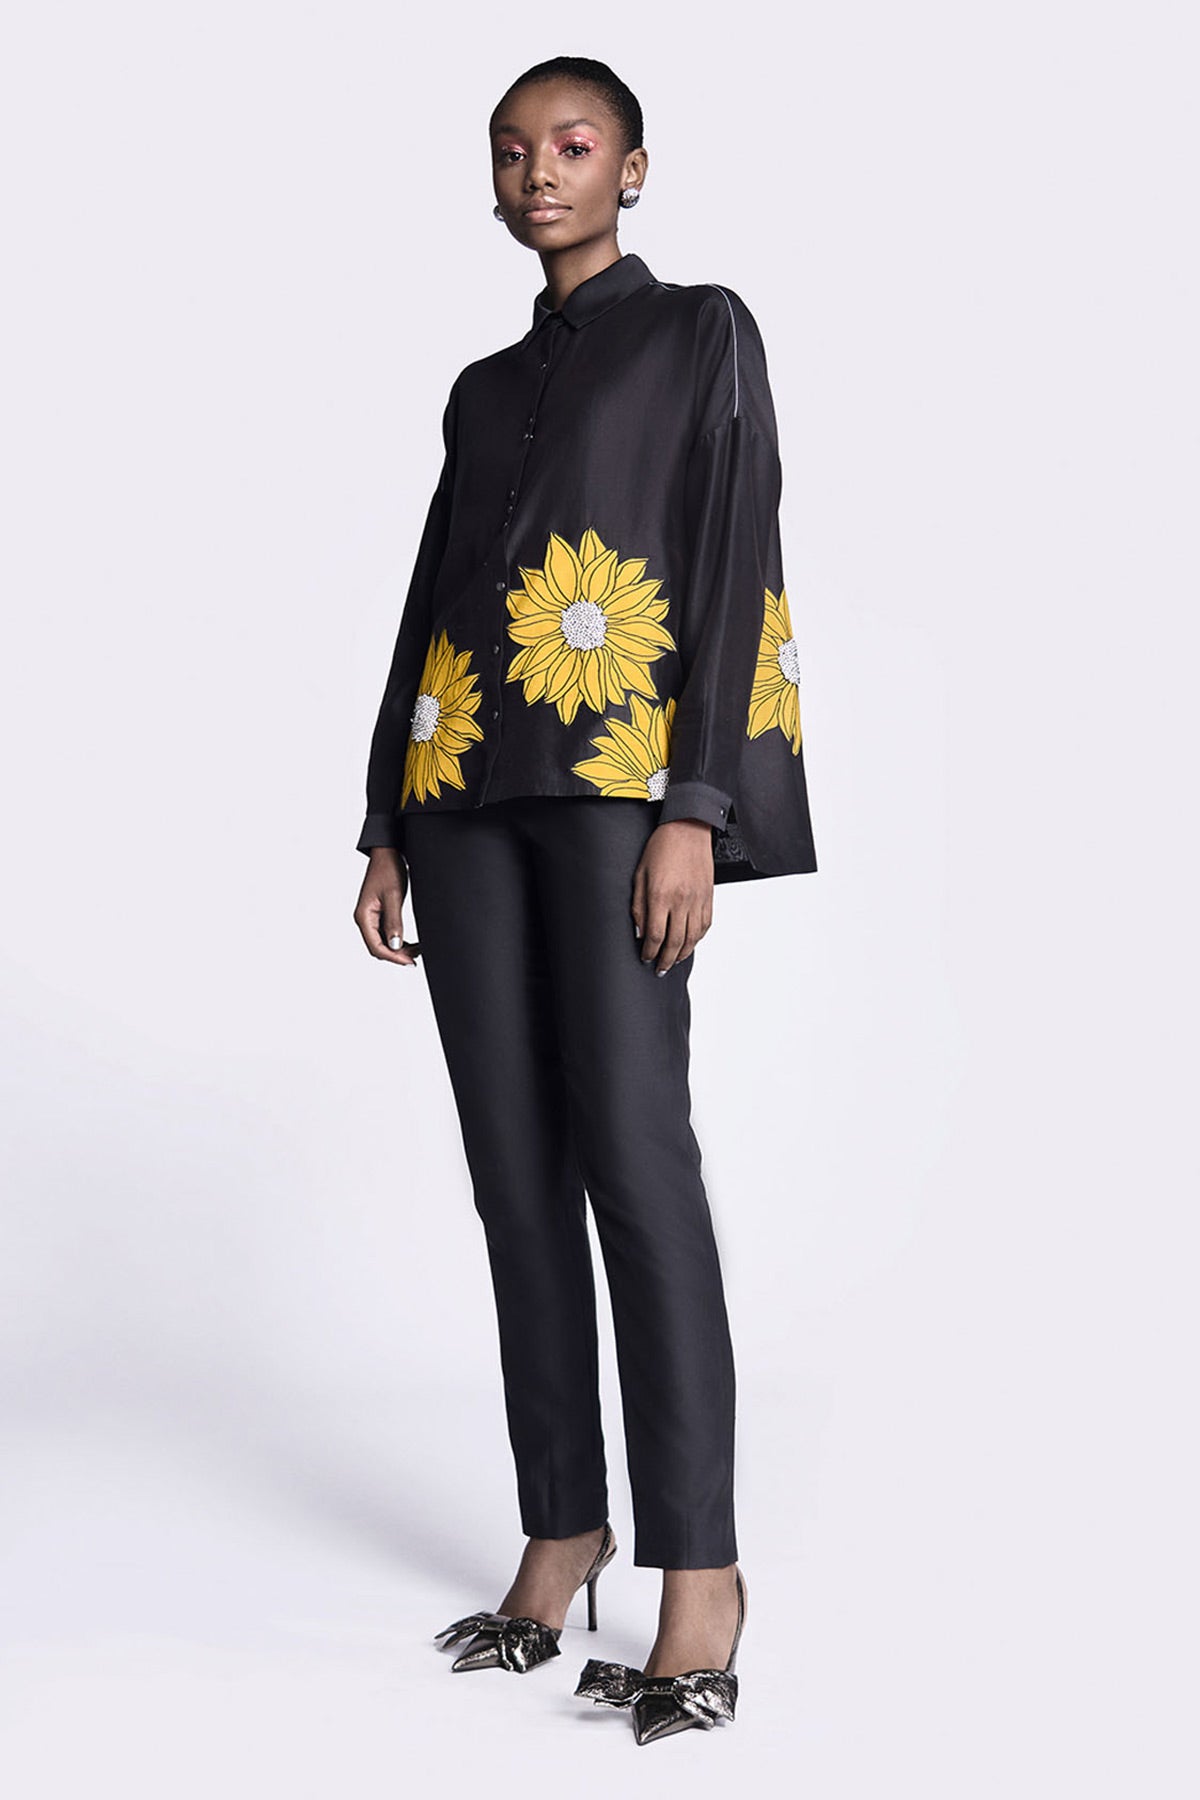 Narrow Pants of (Sunflower Applique Boxy Shirt)